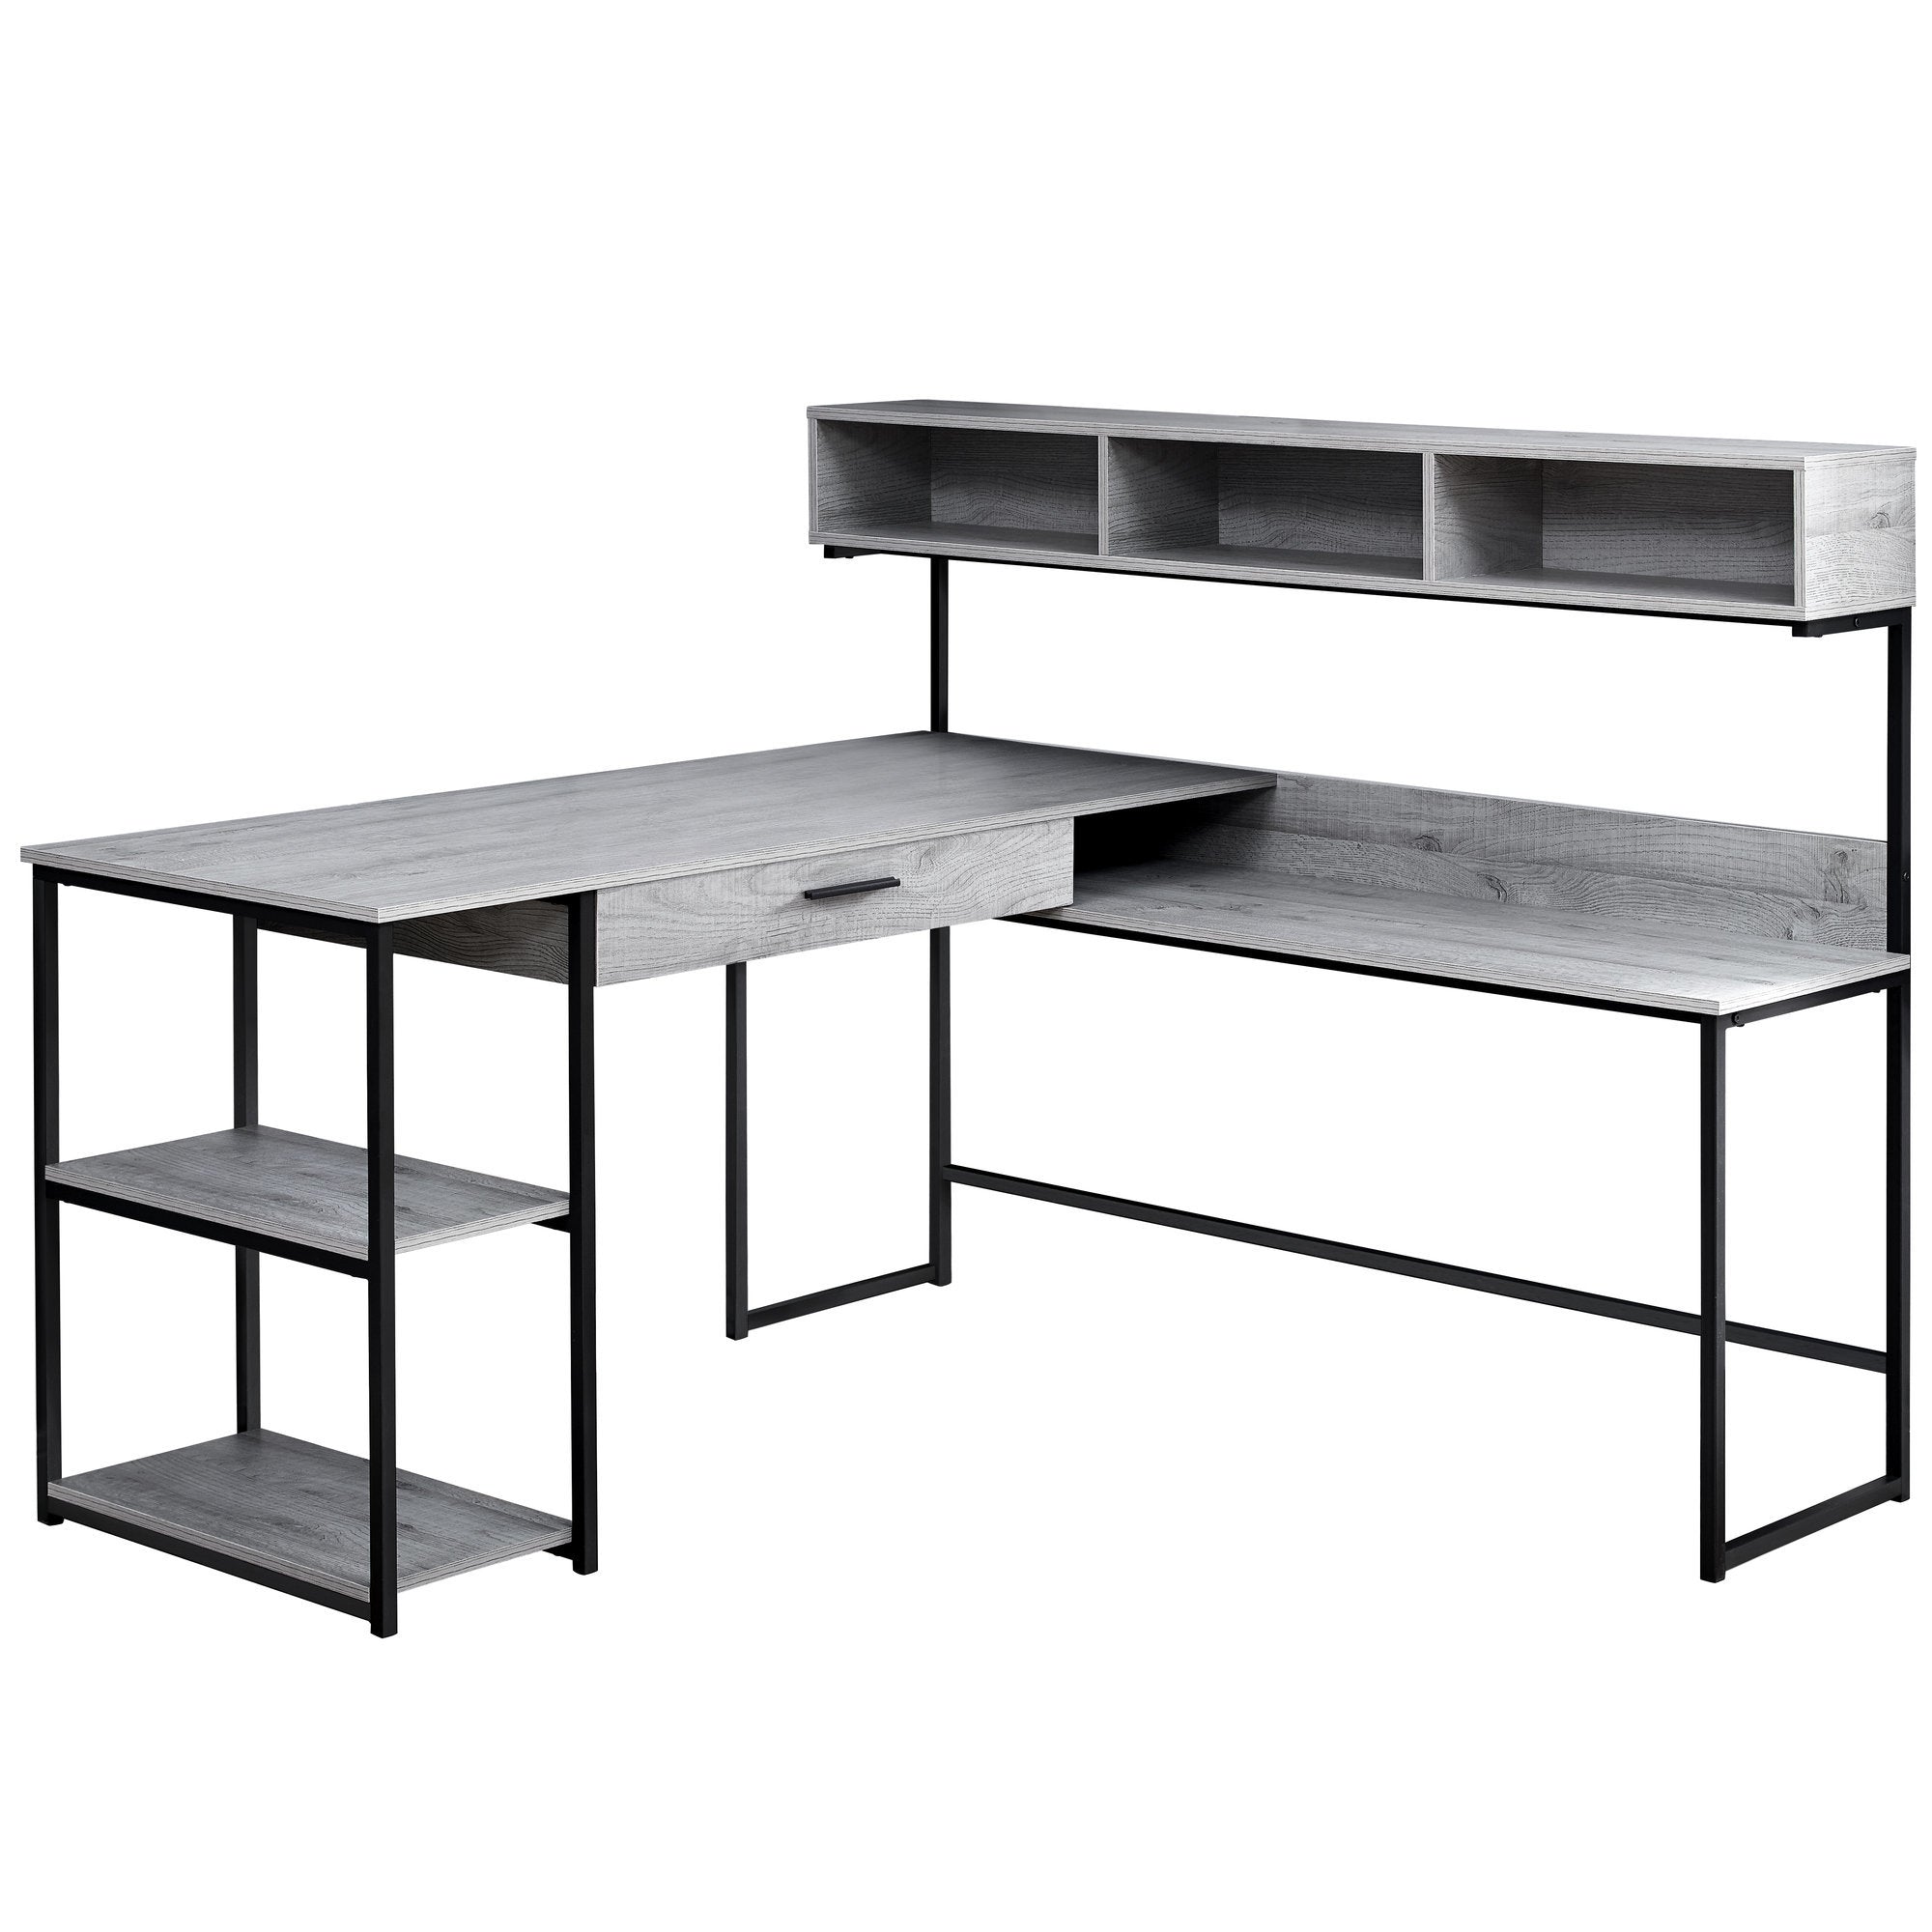 MN-297160    Computer Desk, Home Office, Corner, Storage Drawers, L Shape, Metal, Laminate, Grey, Black, Contemporary, Modern